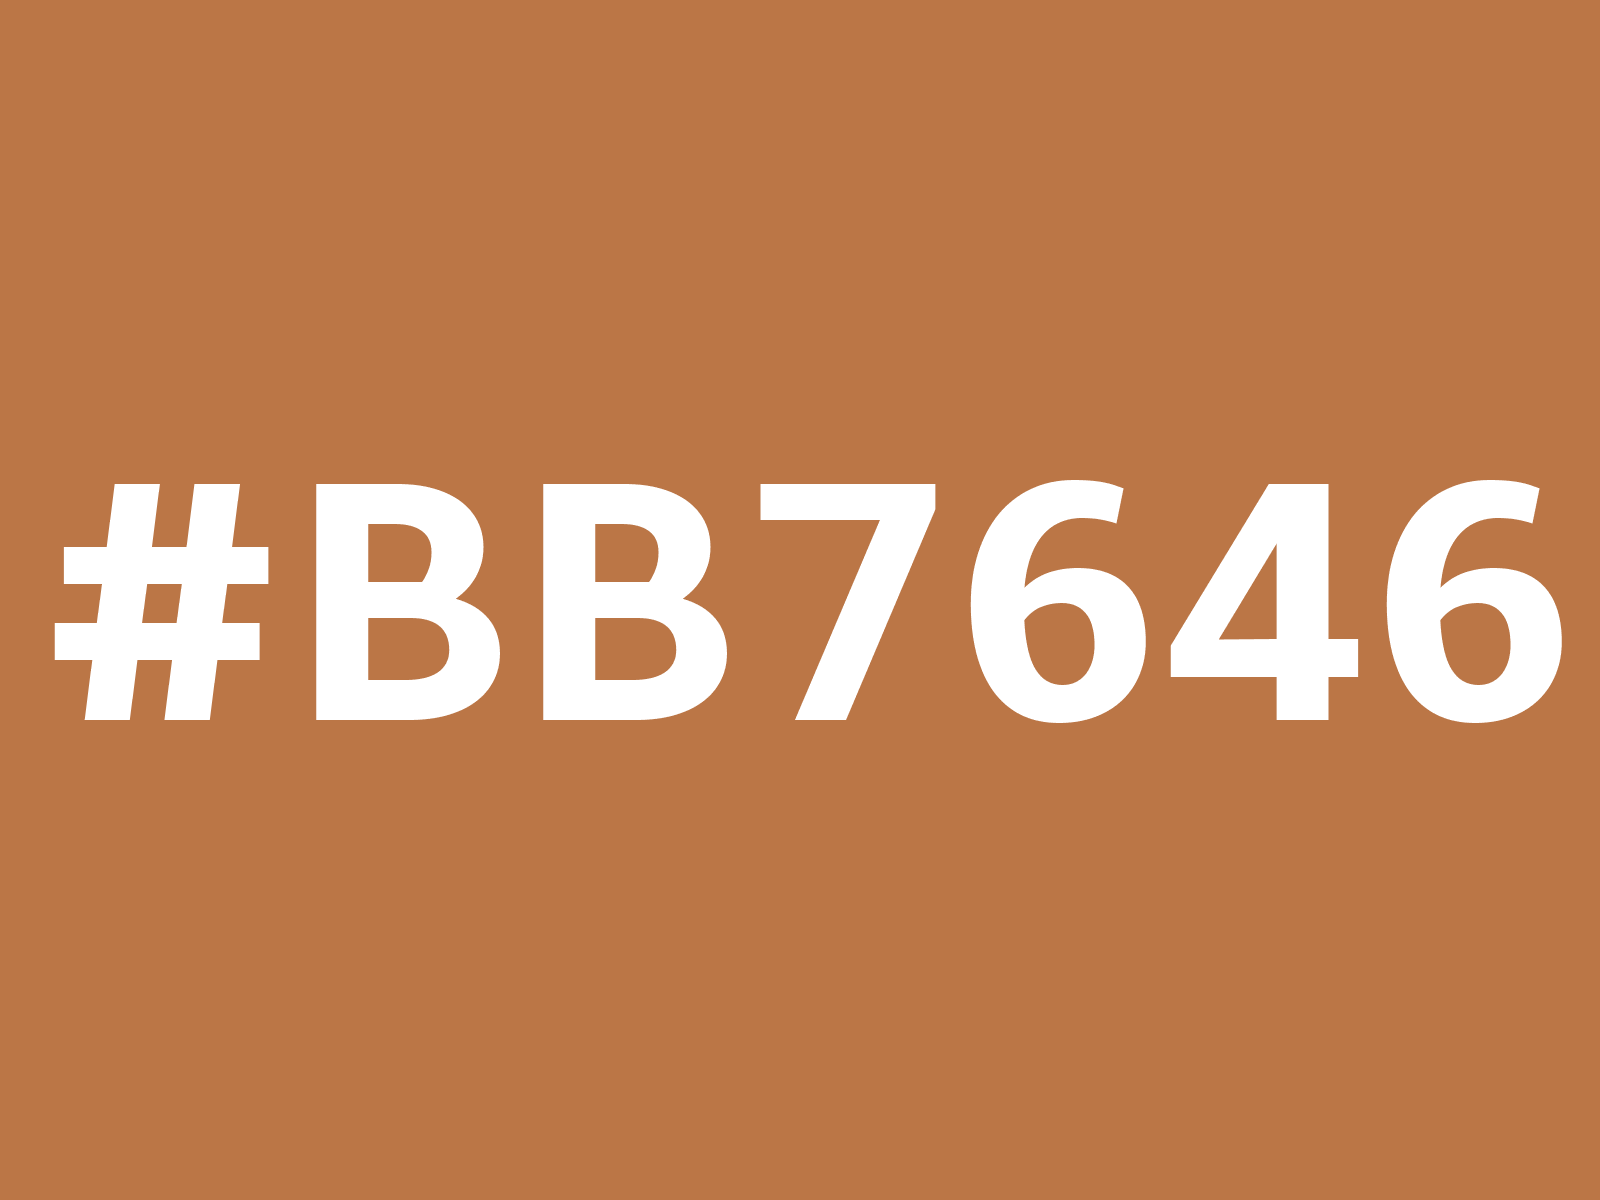 bb7646